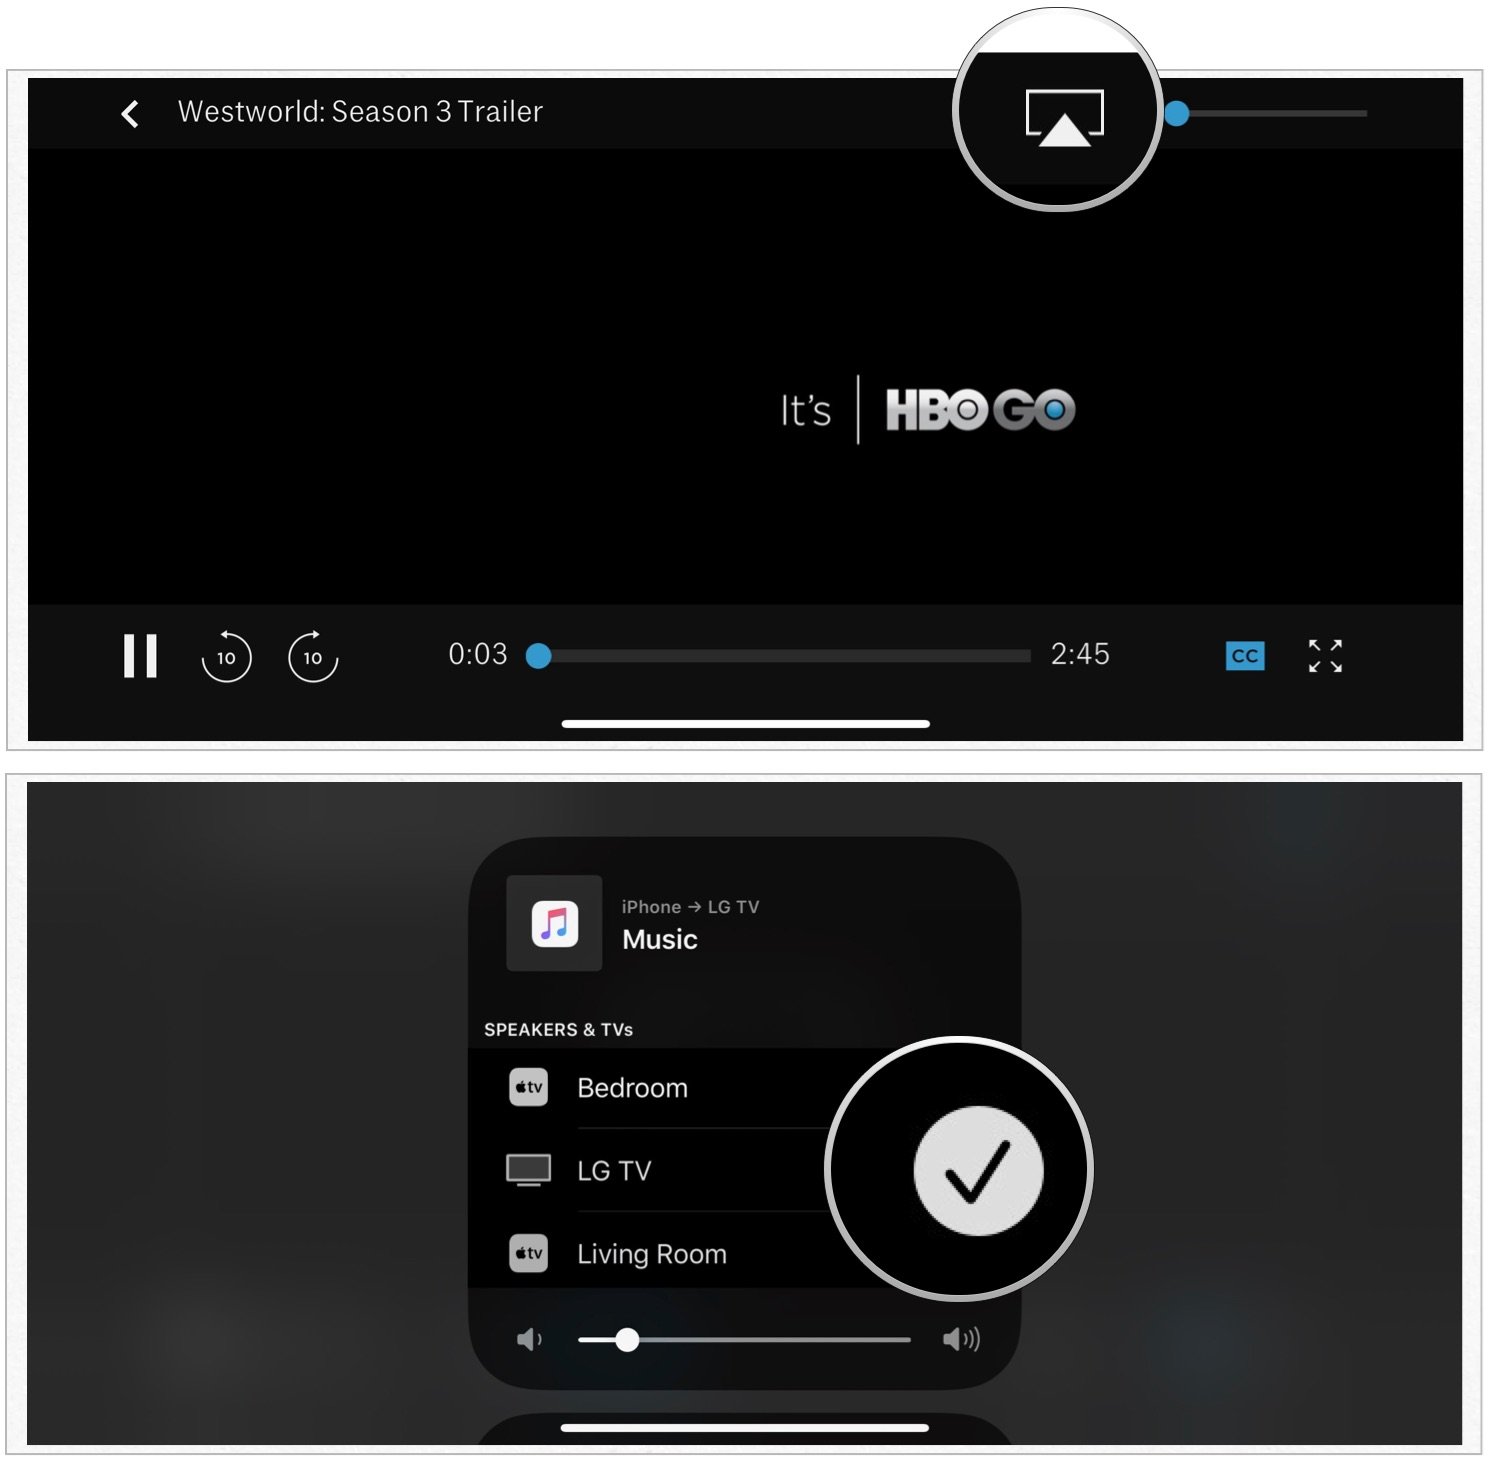 LG TV Airplay. Airplay на телевизоре. Airplay on LG TV. Android TV приложение AIRPAY. Поддержка airplay